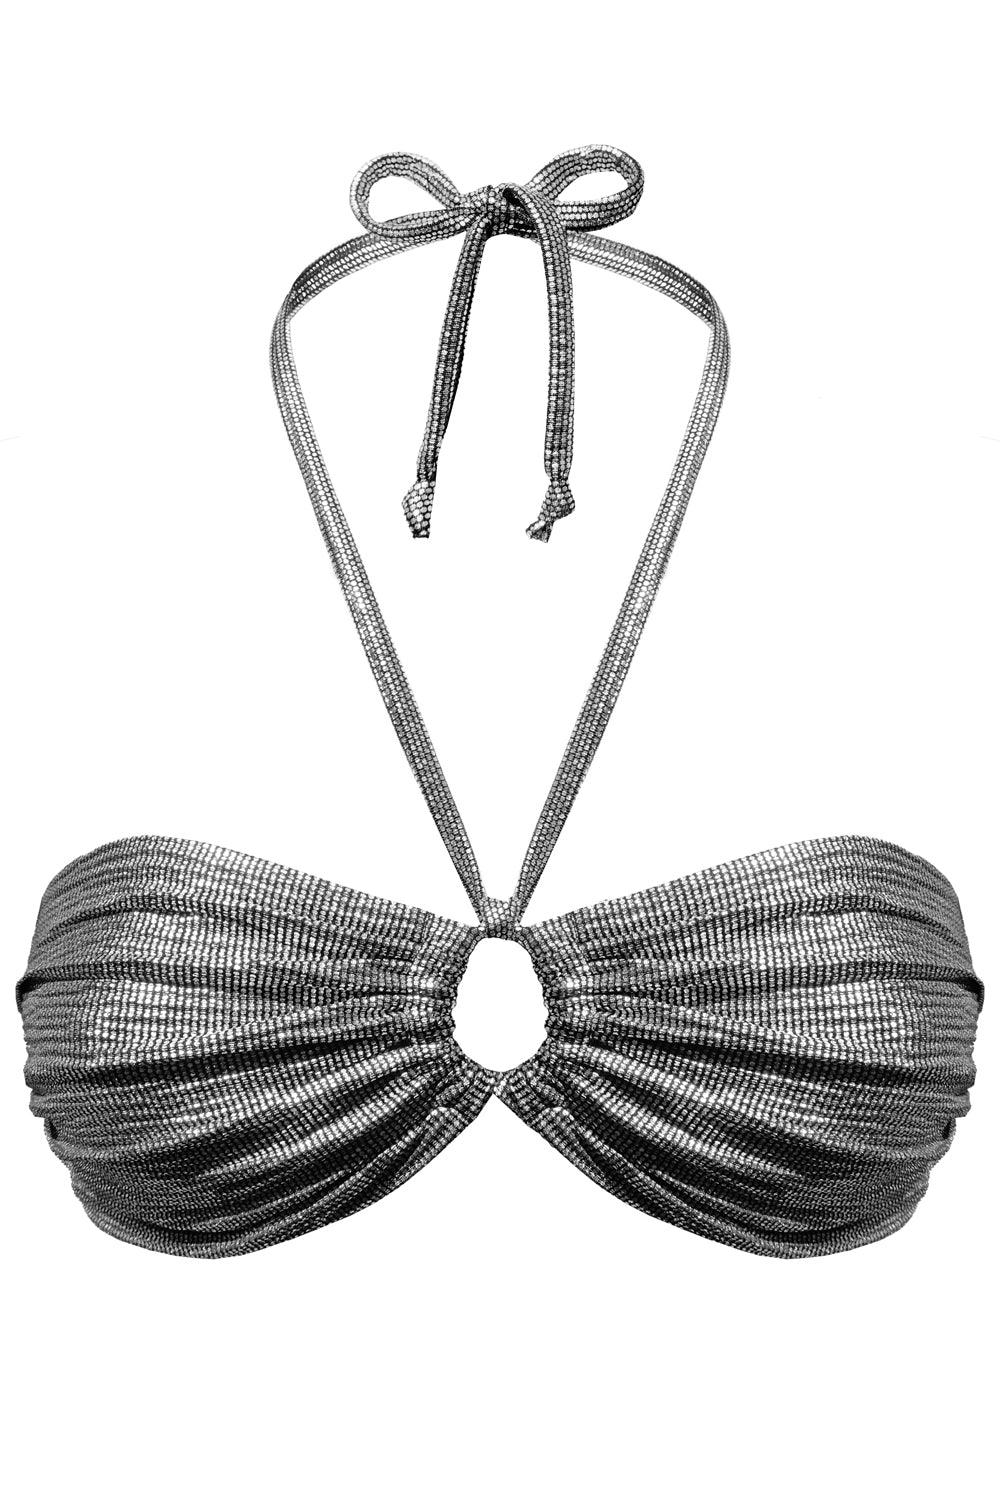 Cressida Silver bandeau - Bikini top by yesUndress. Shop on yesUndress